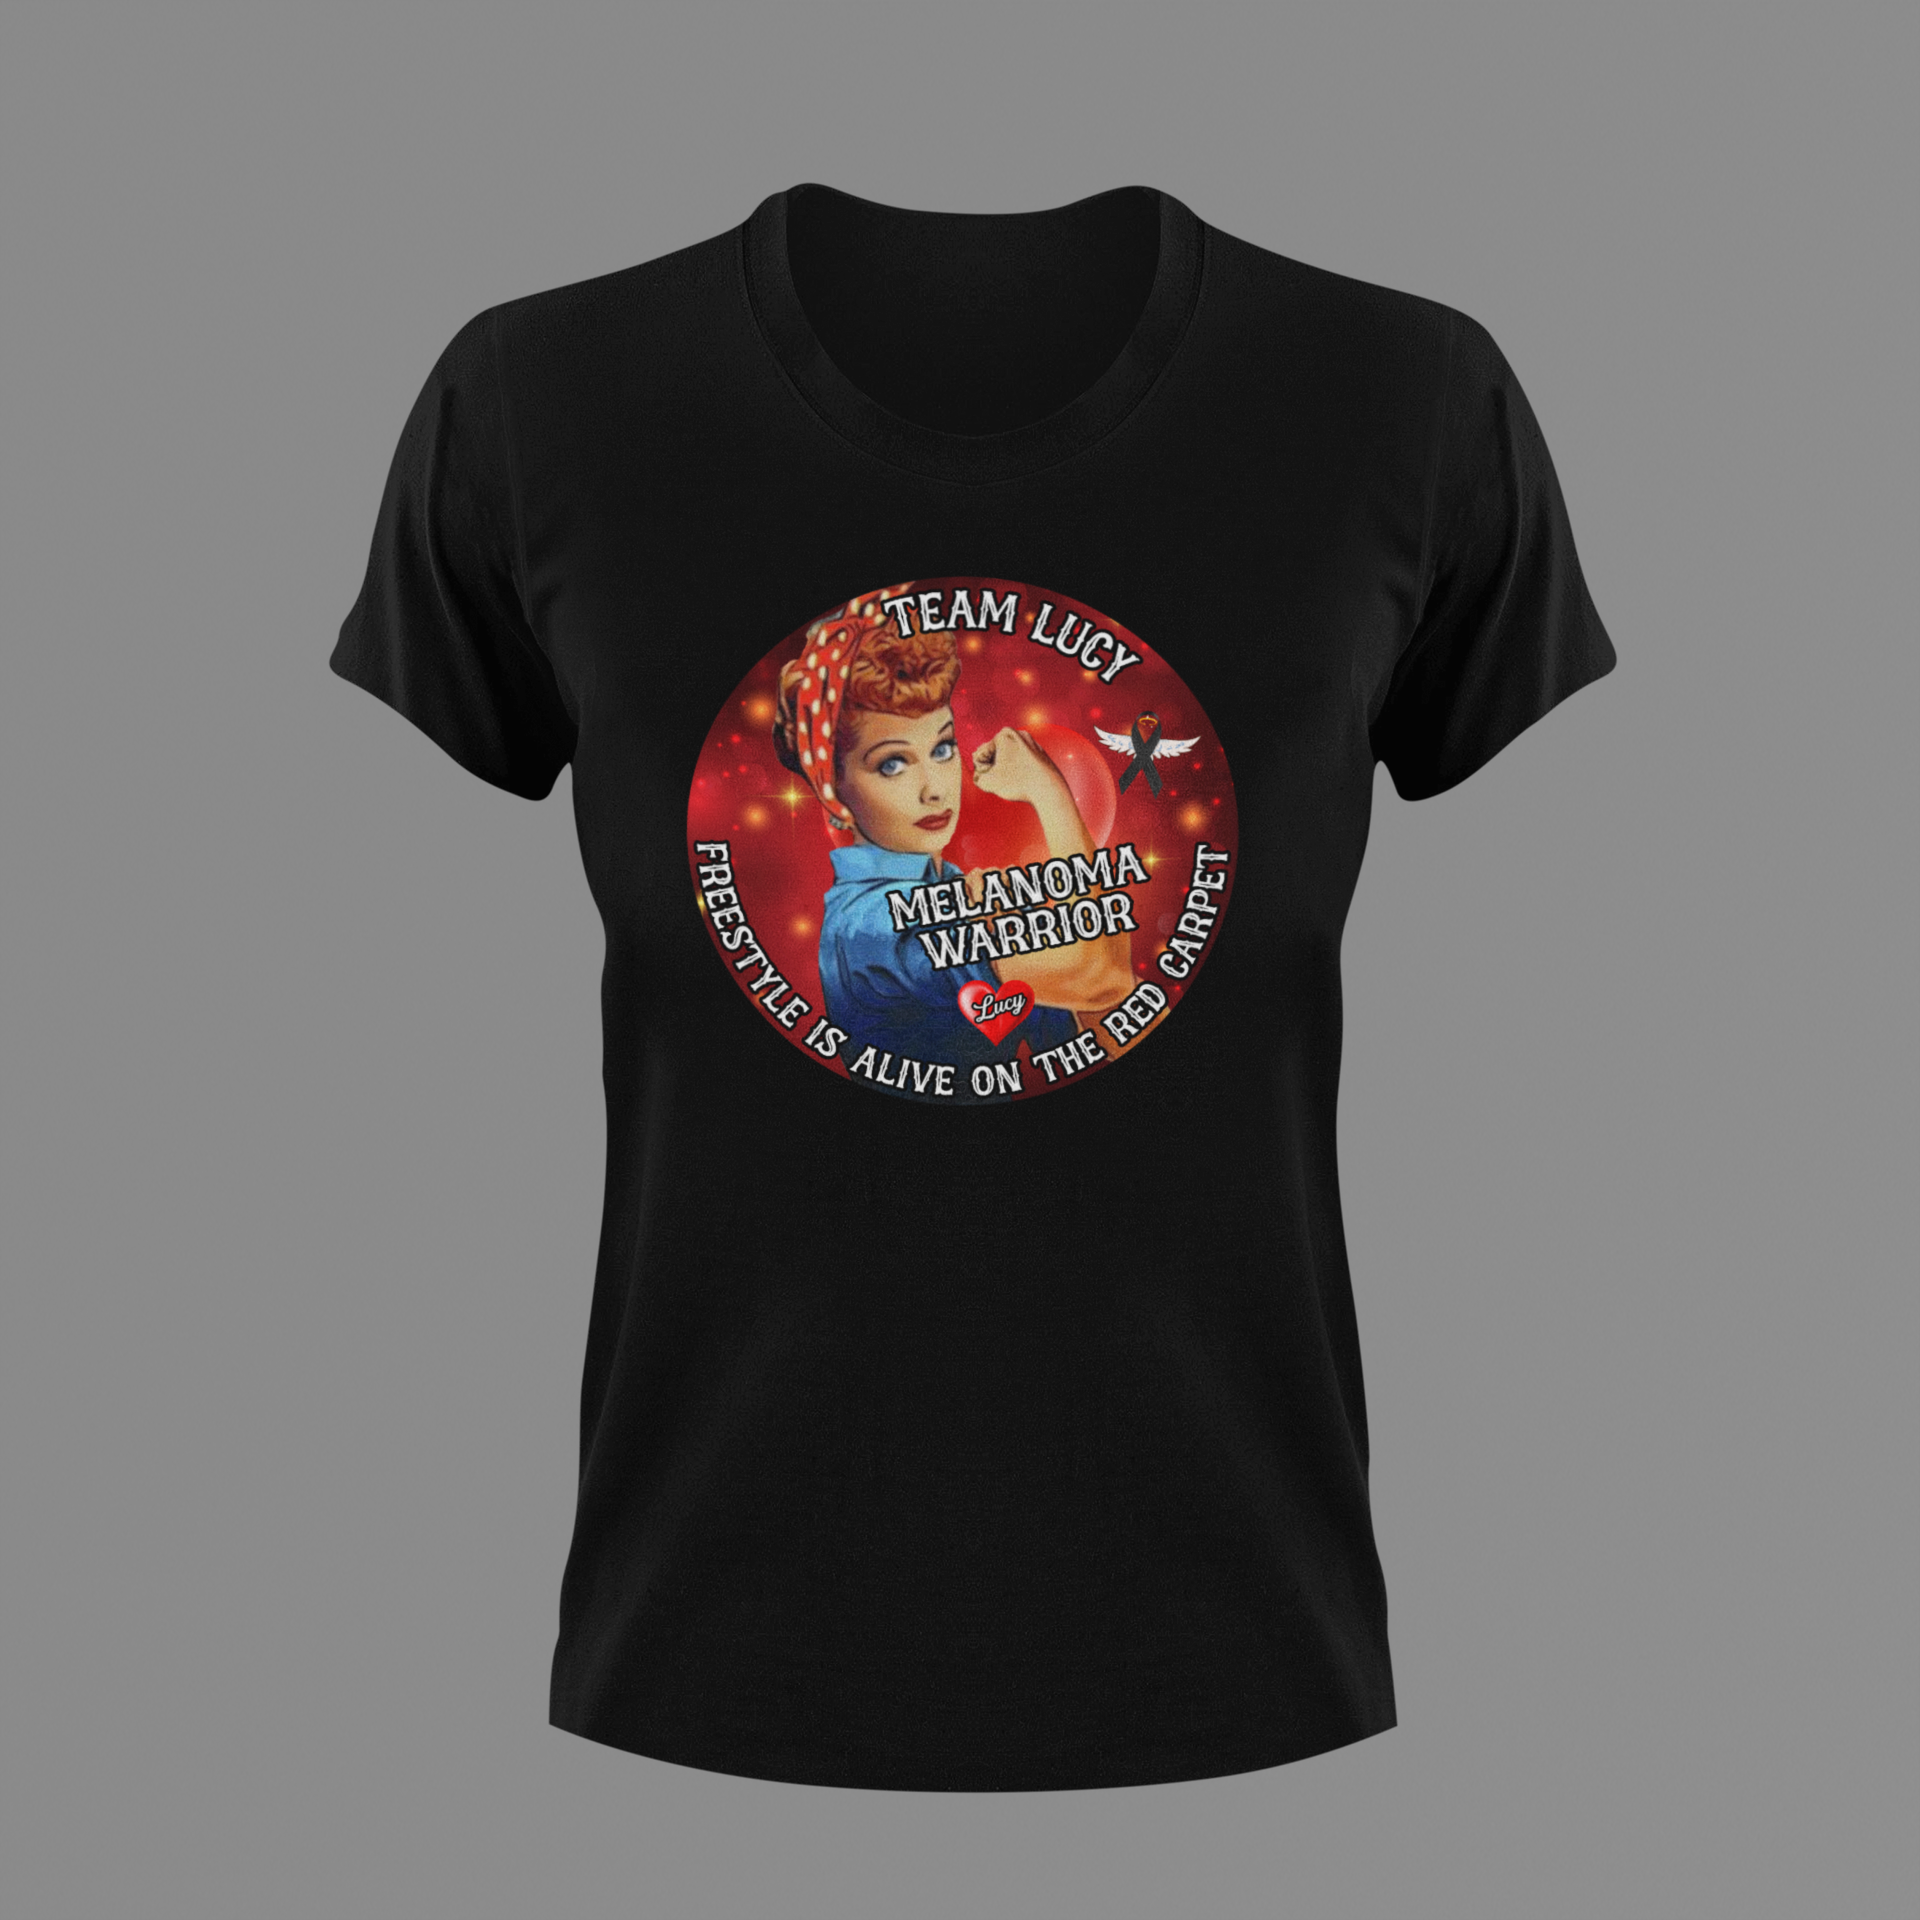 Team Lucy Melanoma Warrior Benefit Shirt.